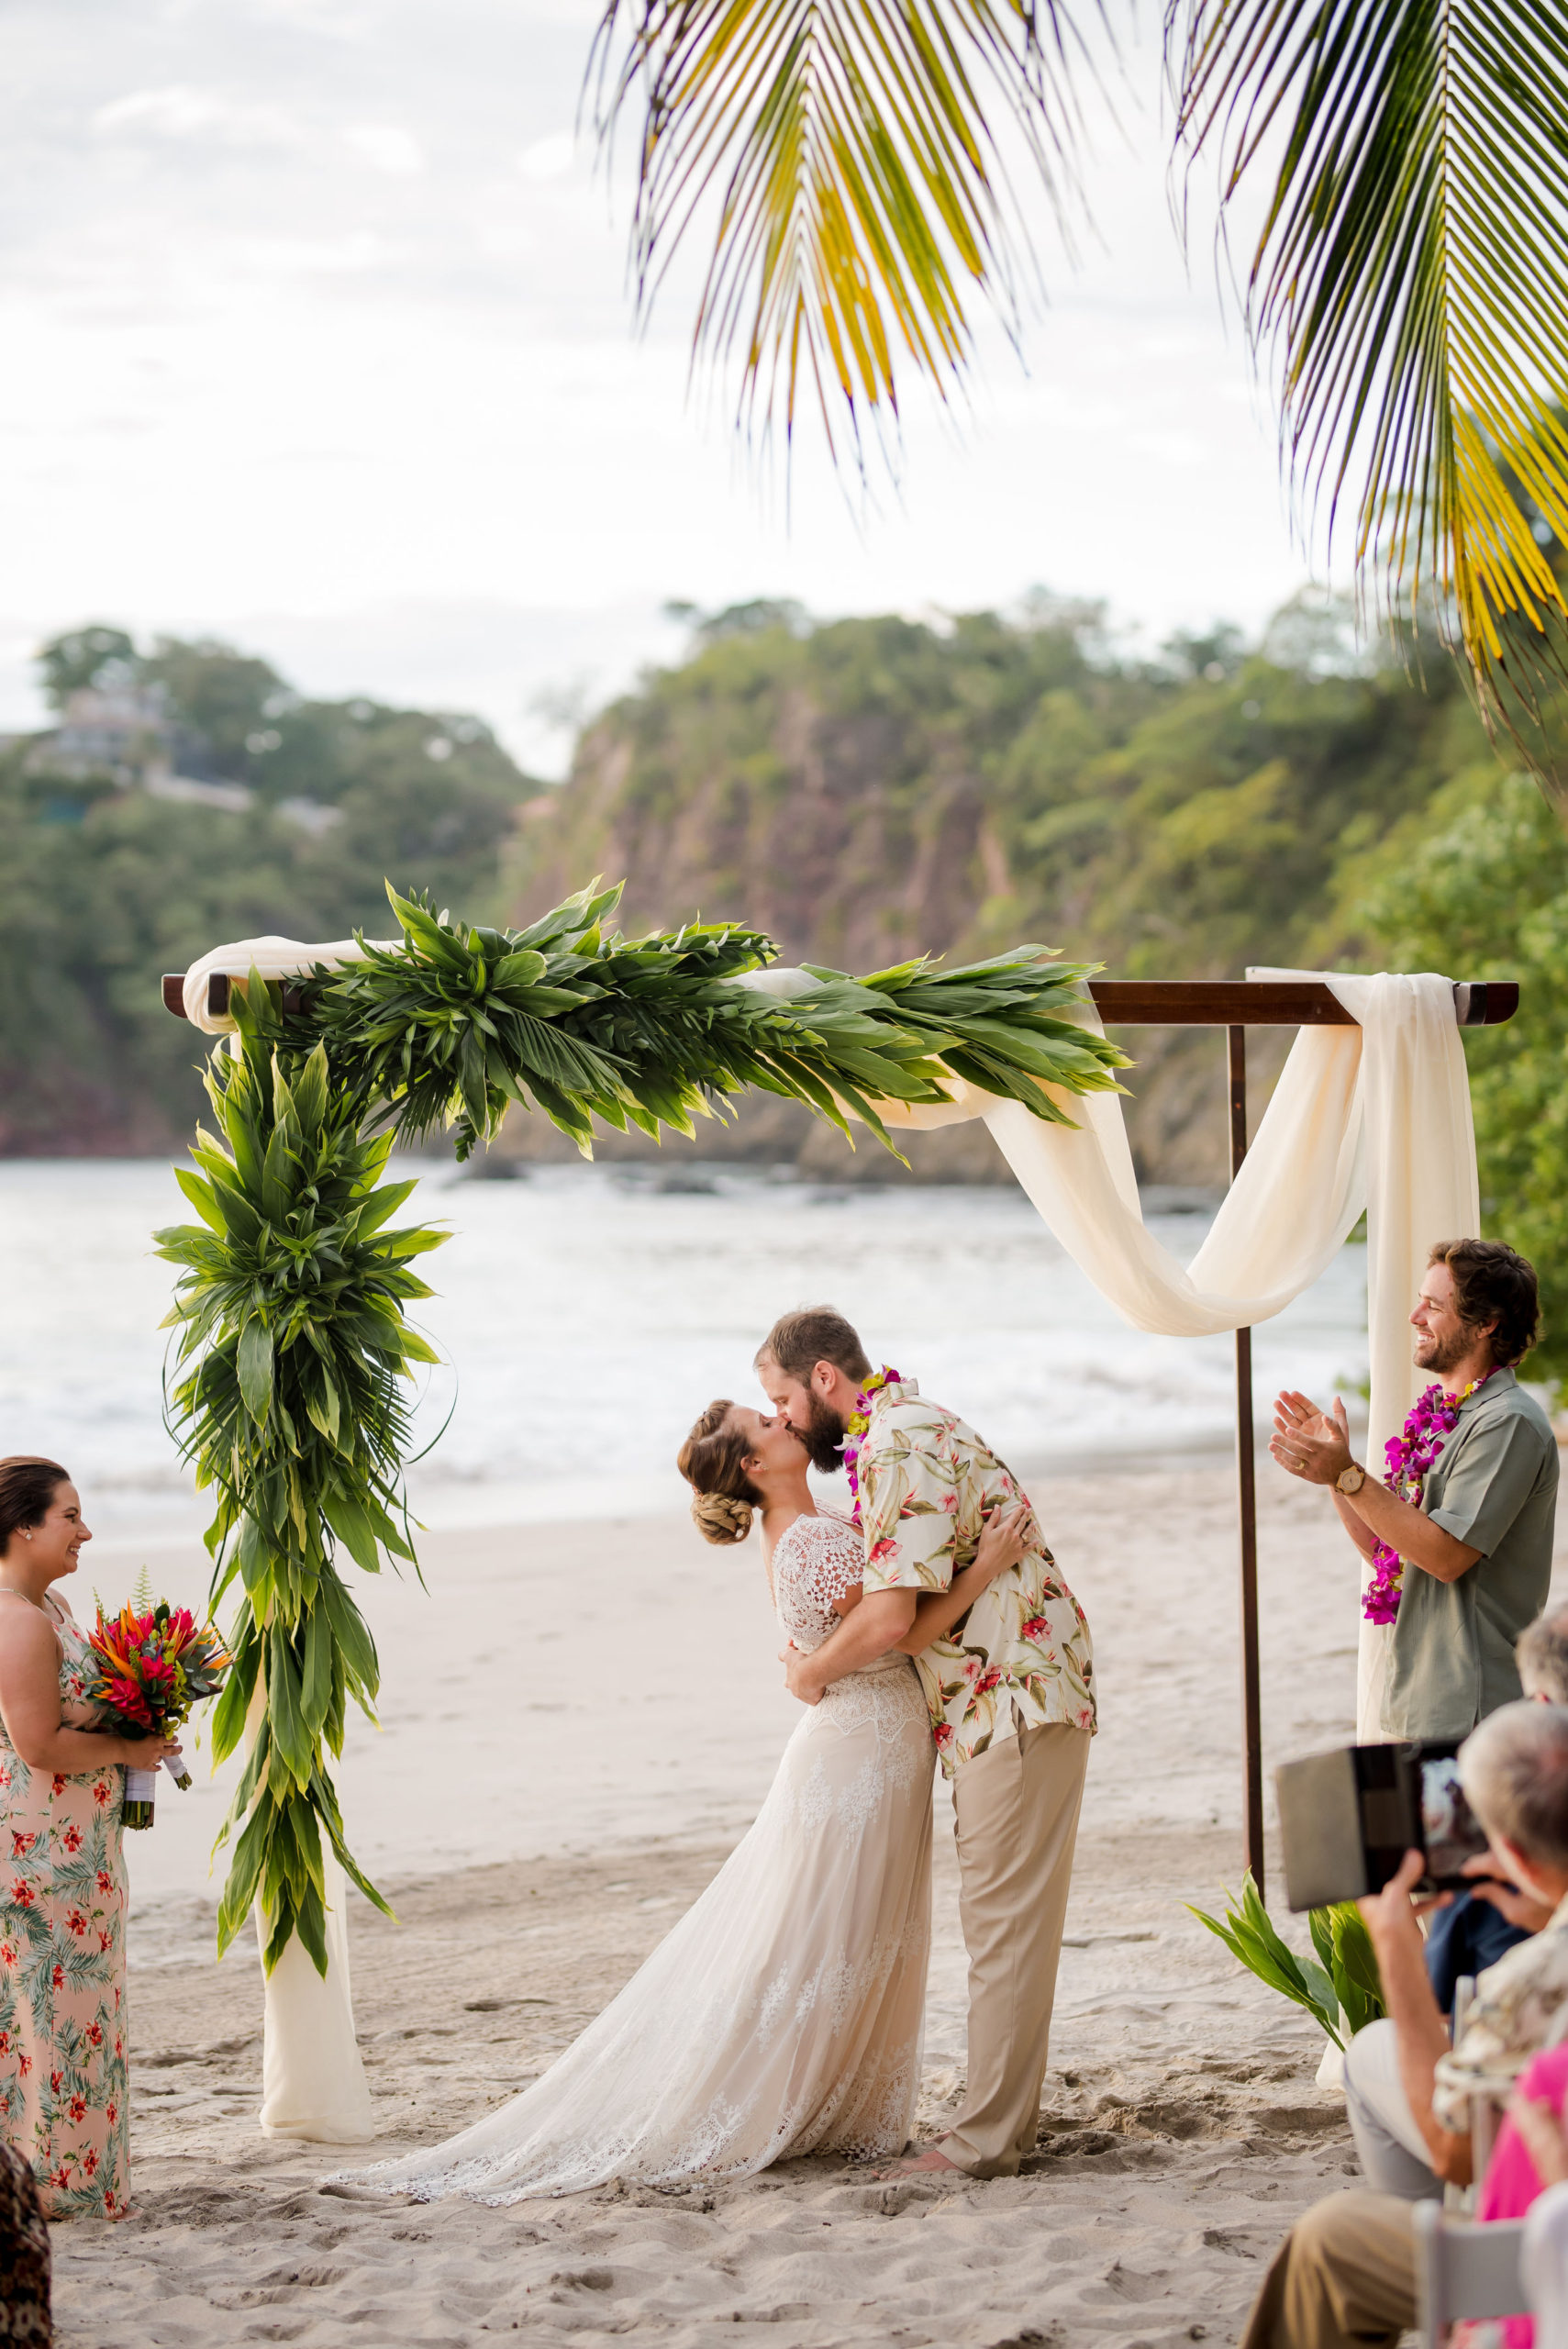 Newlyweds kiss on the beach of Costa Rica property Margaritavilla Beach Resort in dream destination wedding